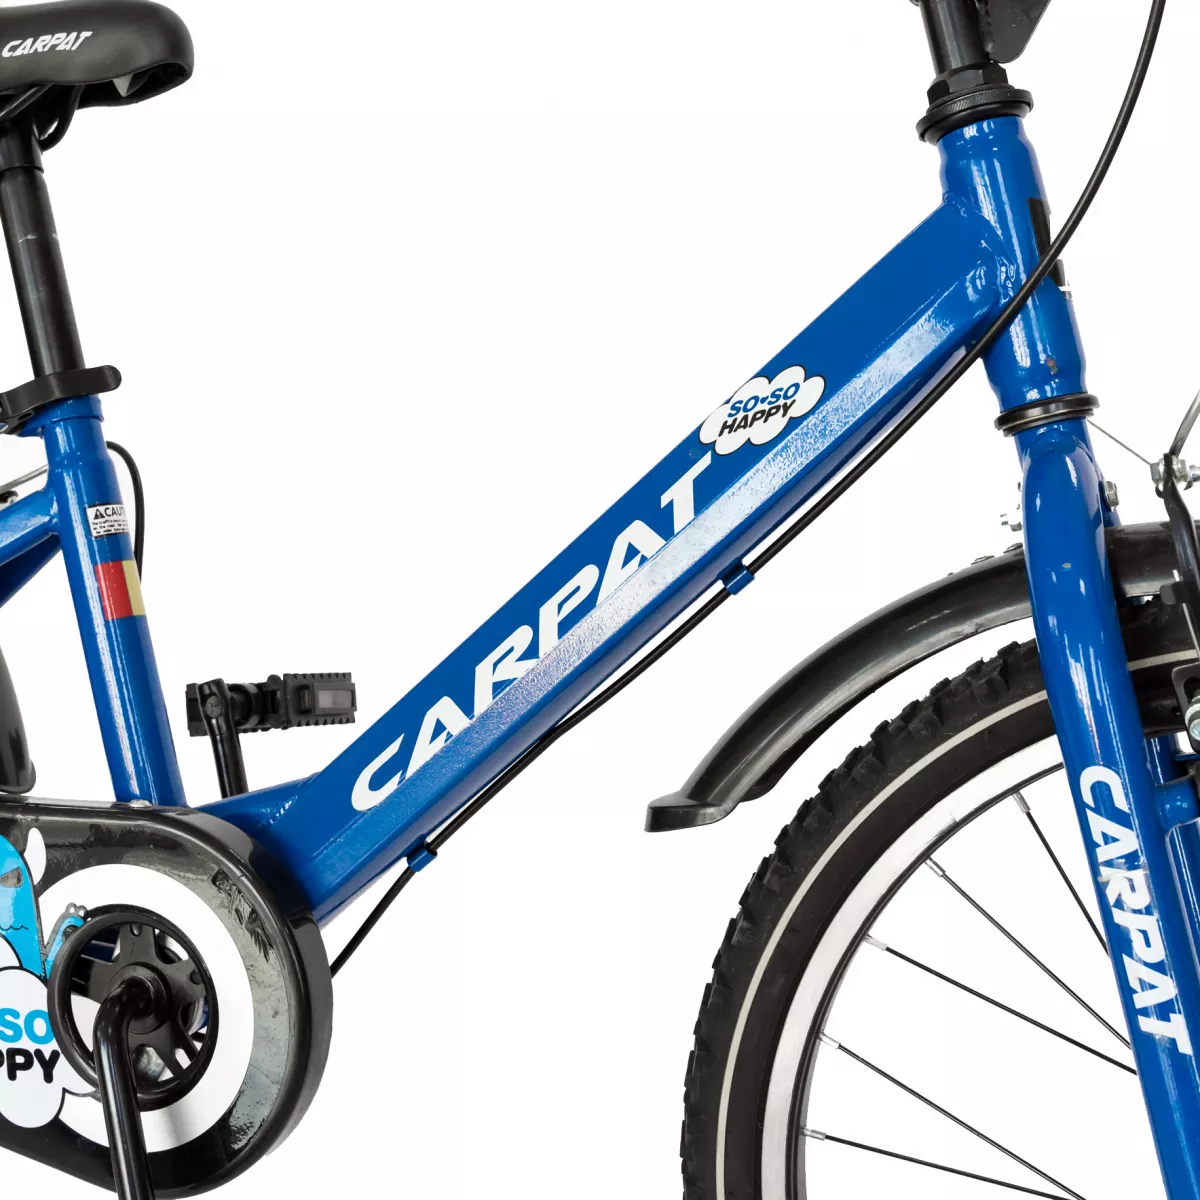 Bicicleta baieti CARPAT C2001C, roata 20", V-Brake, 7-10 ani, albastru/negru - RESIGILATA